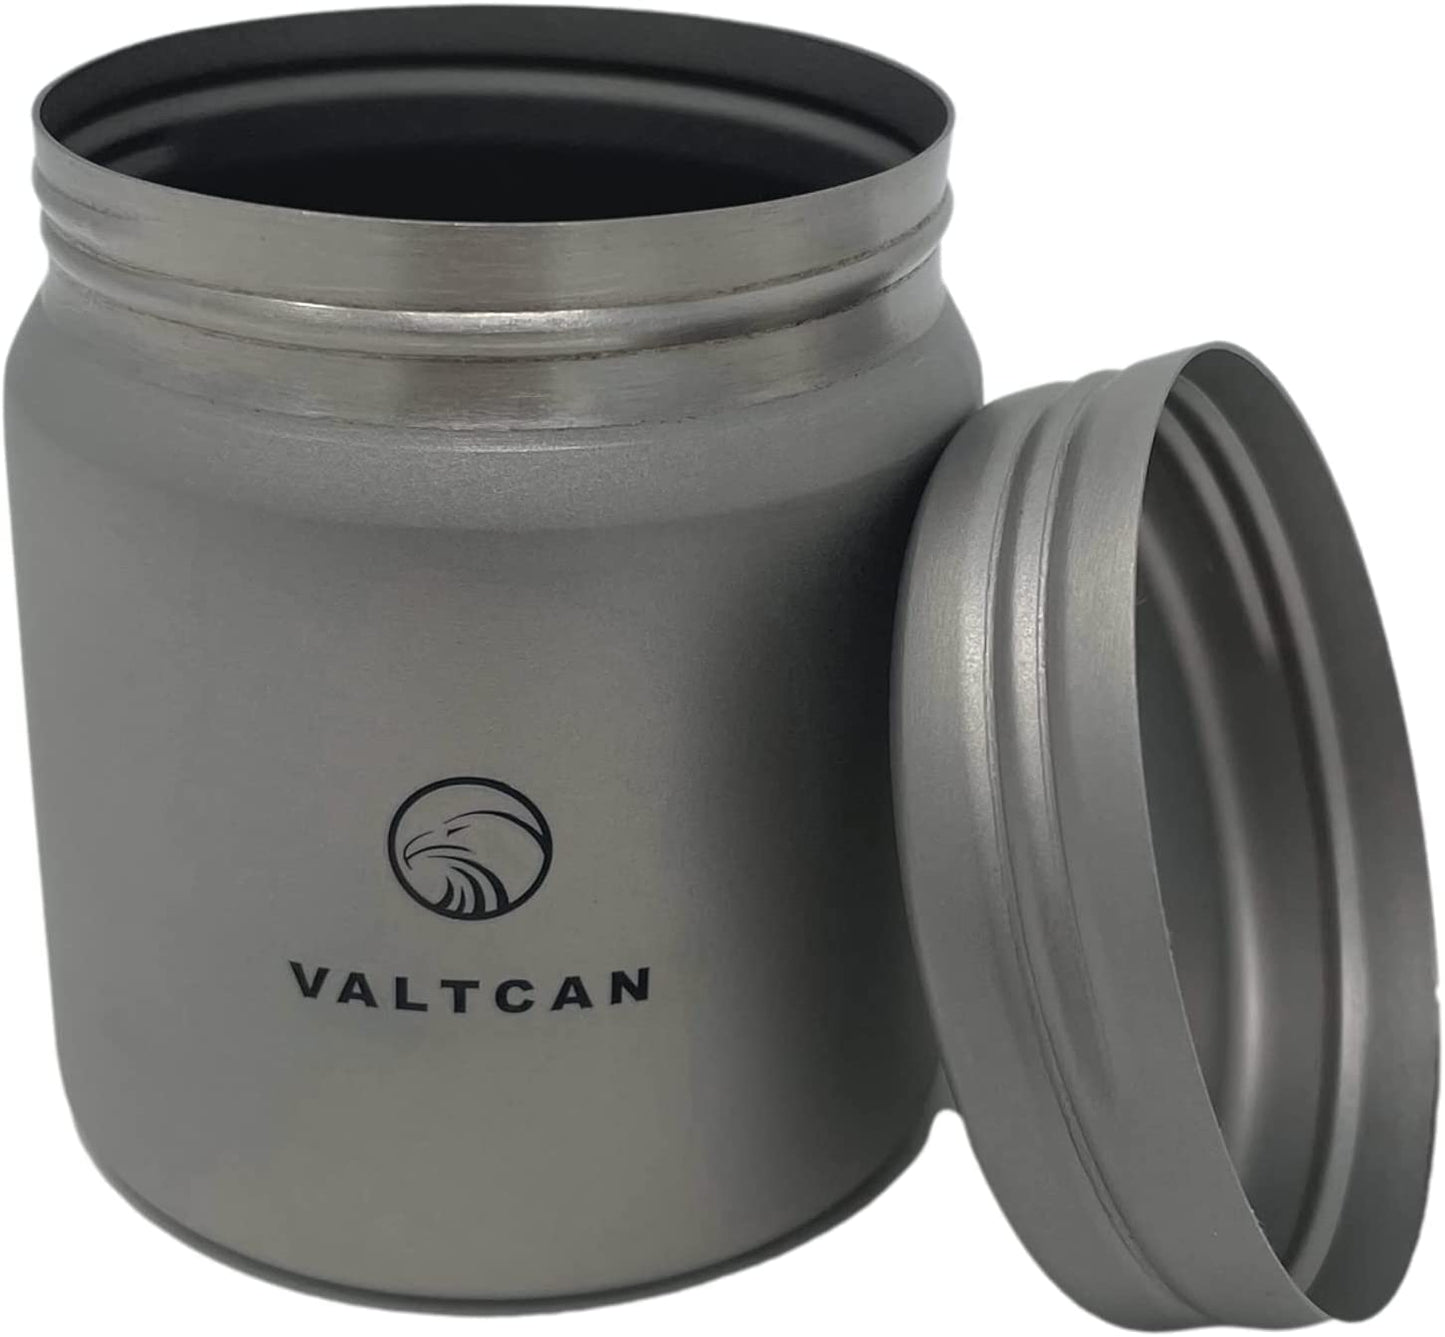 Valtcan Titanium Canister for Tea Sugar Salt Storage Stackable Case Lid 48g